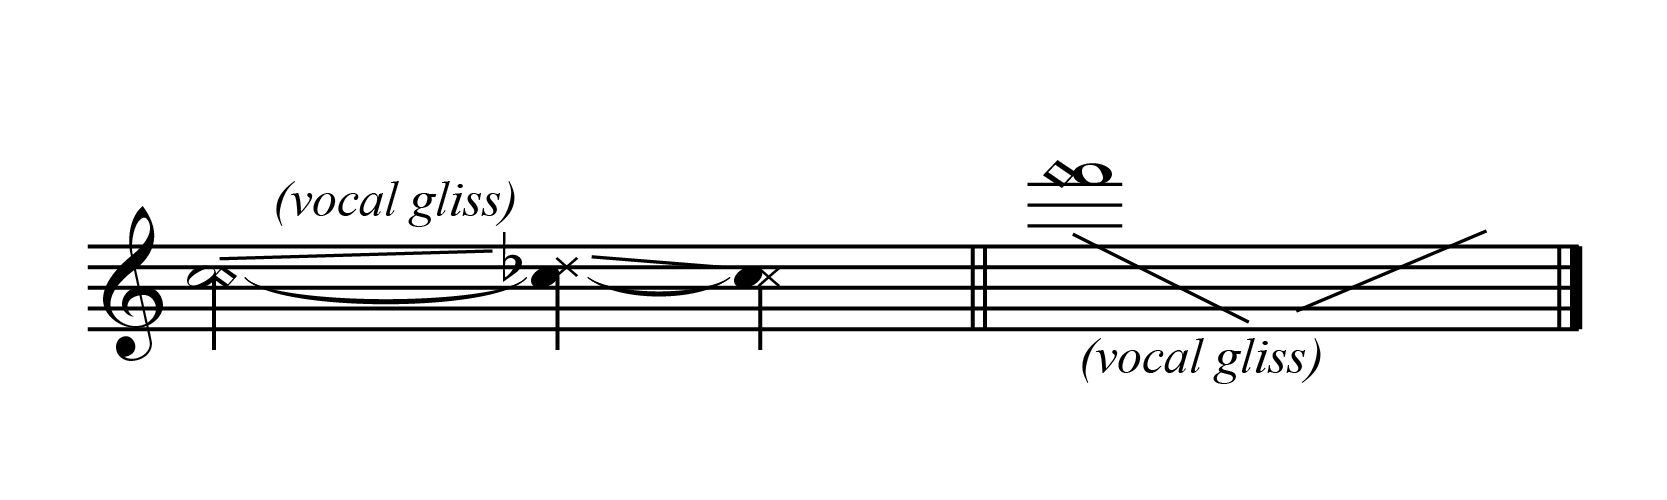 Notation of vocal glissandi